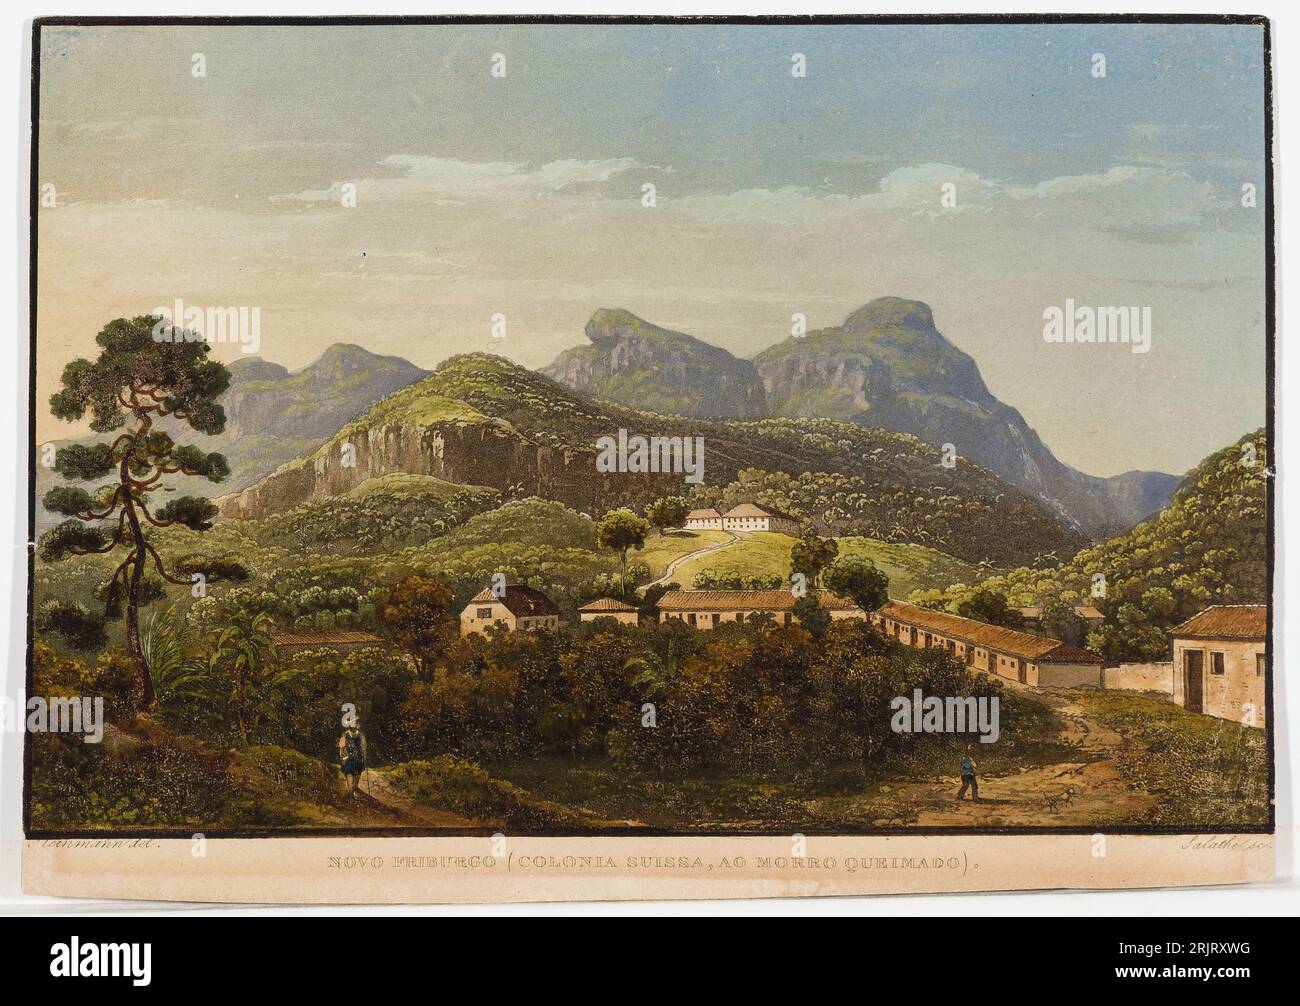 Novo Friburgo (Colonia Suissa, ao Morro Queimado) 1839 by Friedrich Salathé Stock Photo